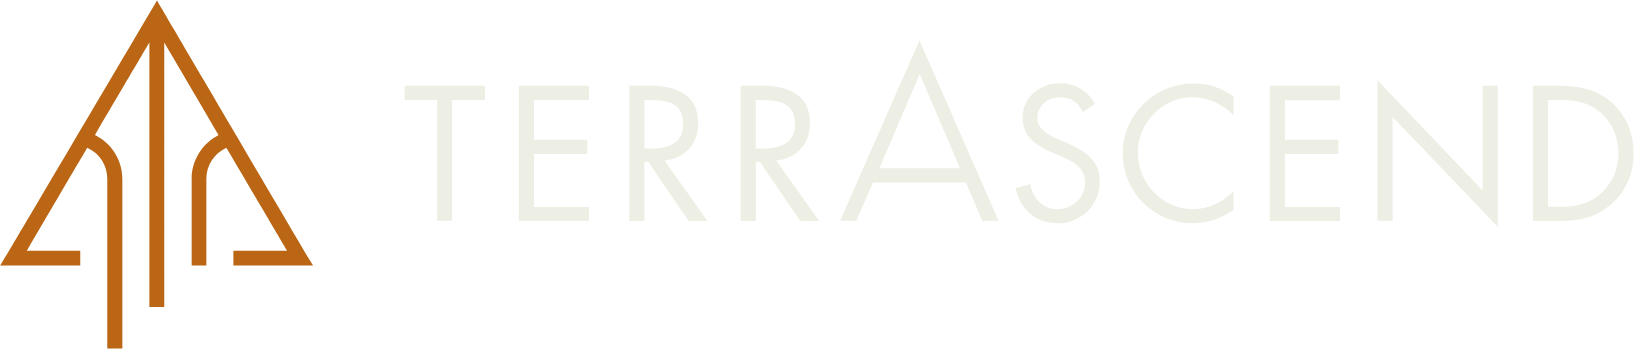 TerrAscend Logo groß für dunkle Hintergründe (transparentes PNG)